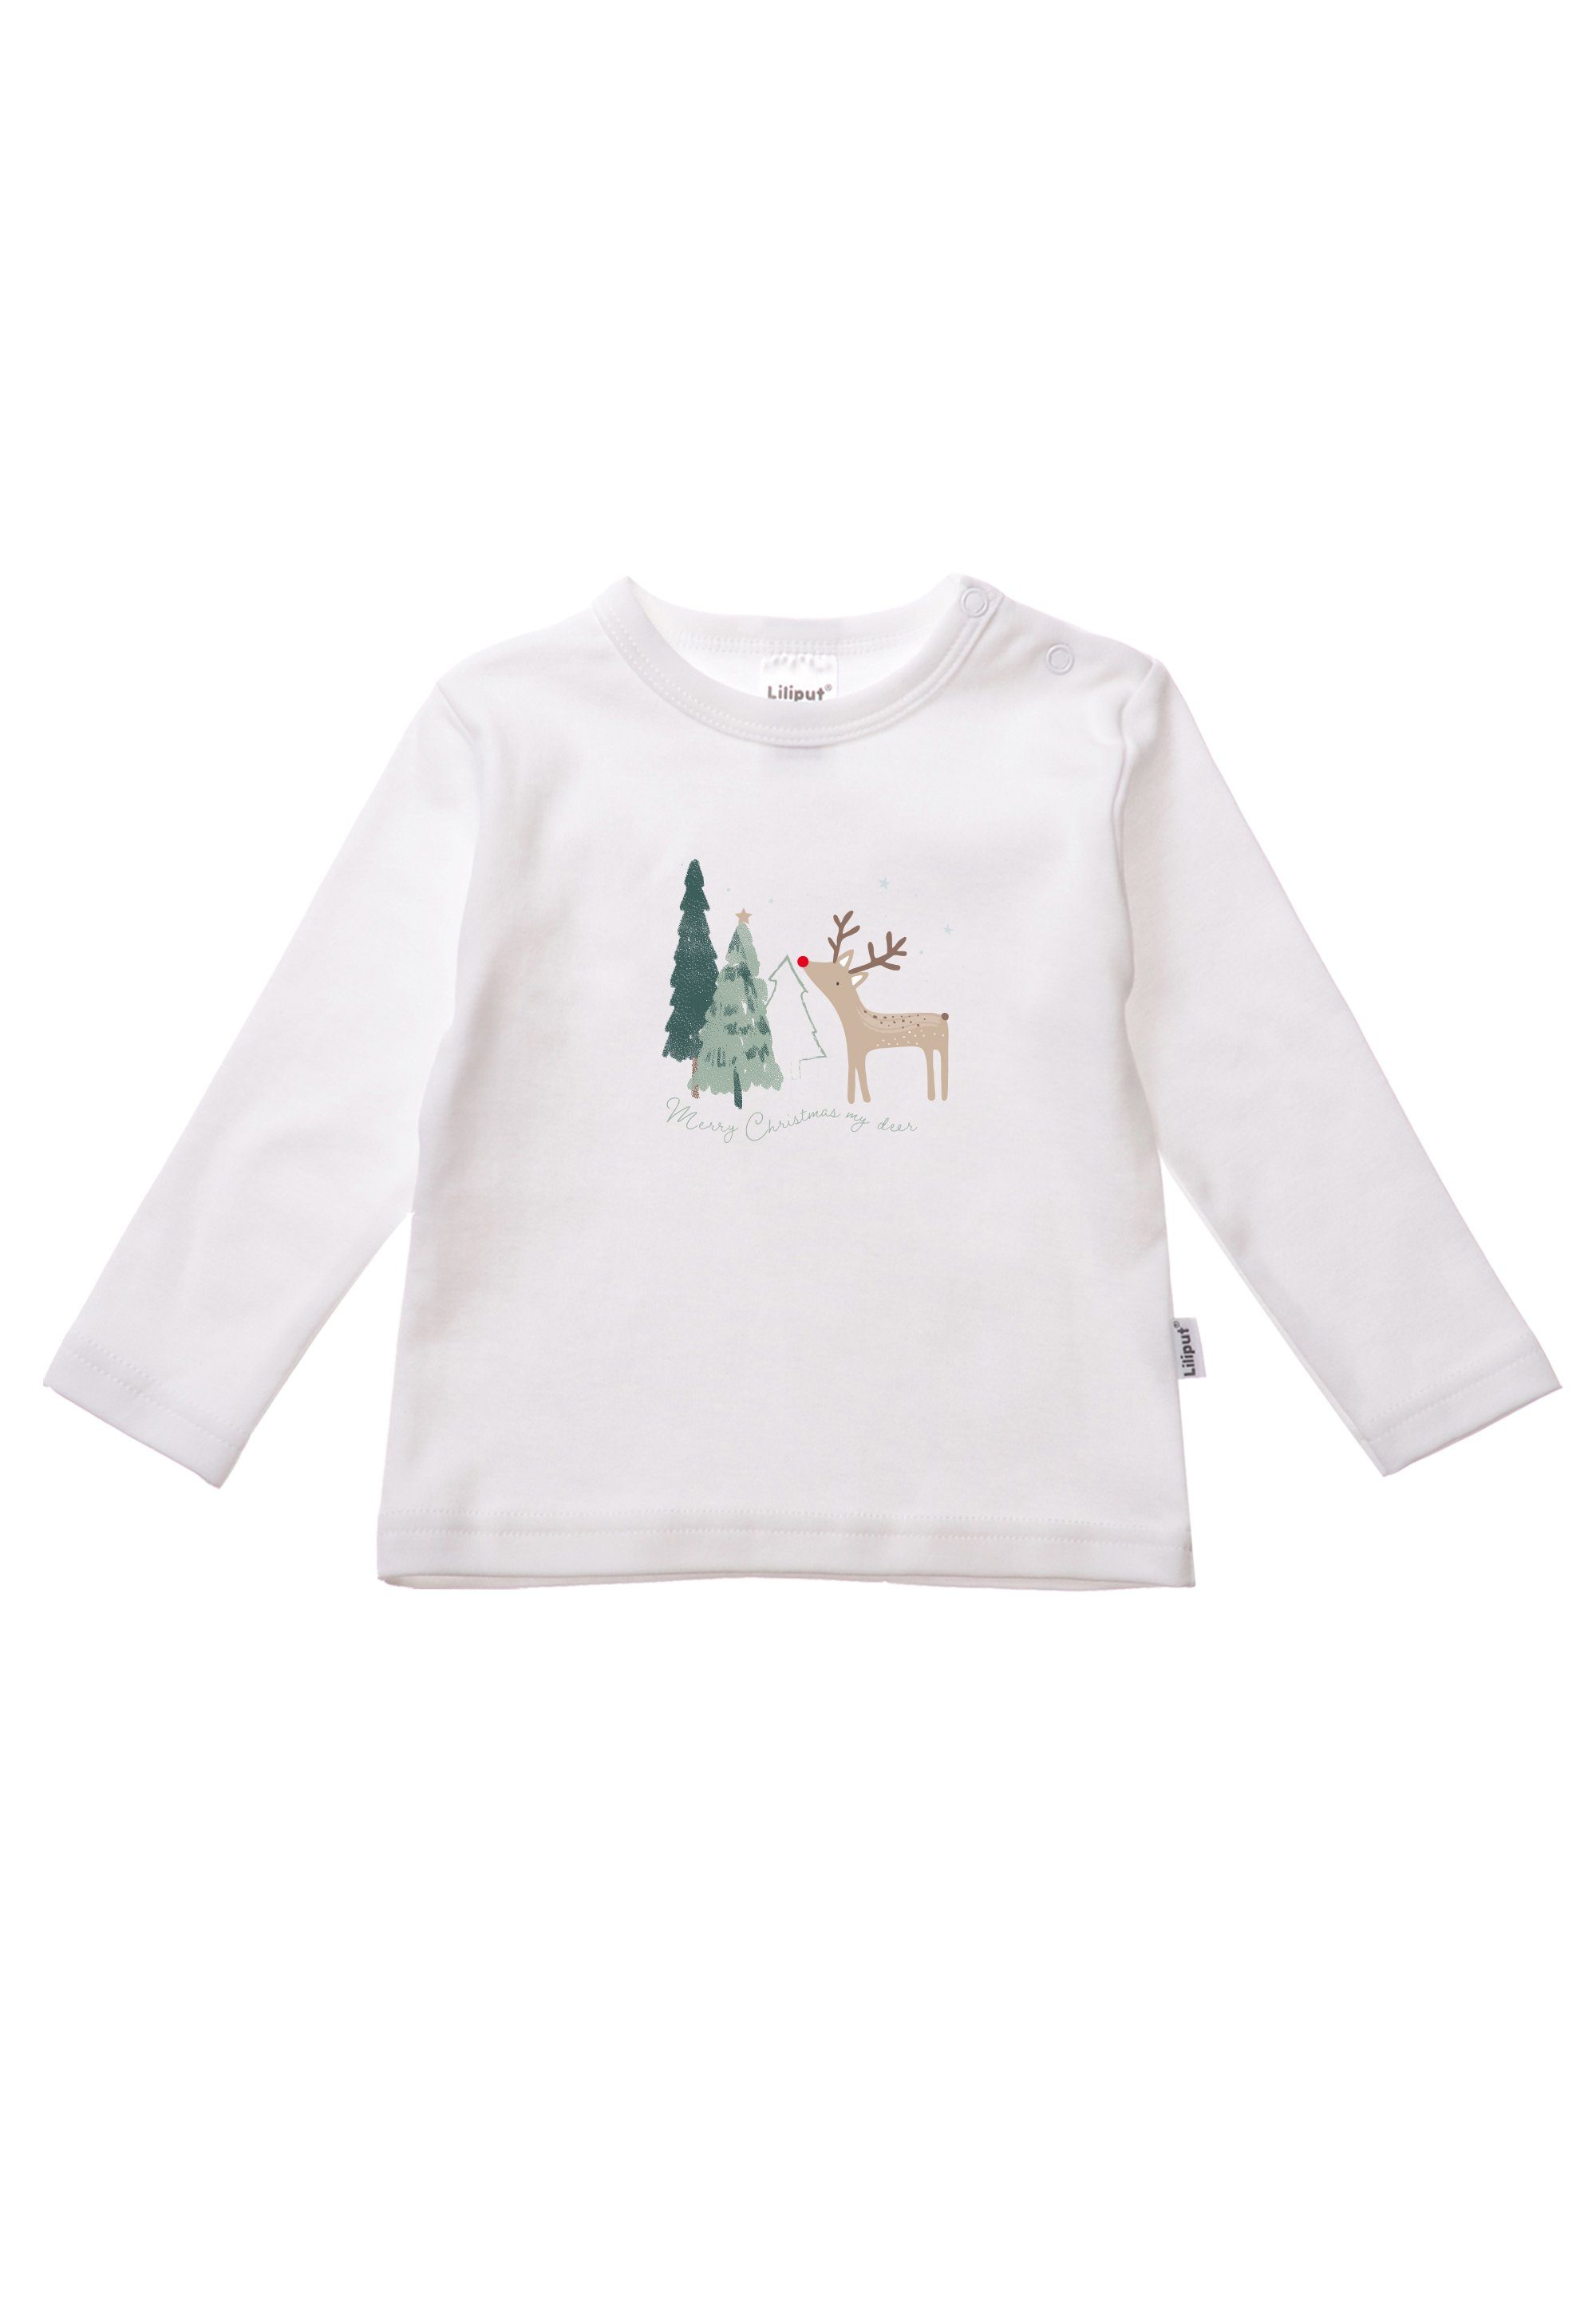 mit Christmas Merry Liliput T-Shirt Rundhalsausschnitt bequemem